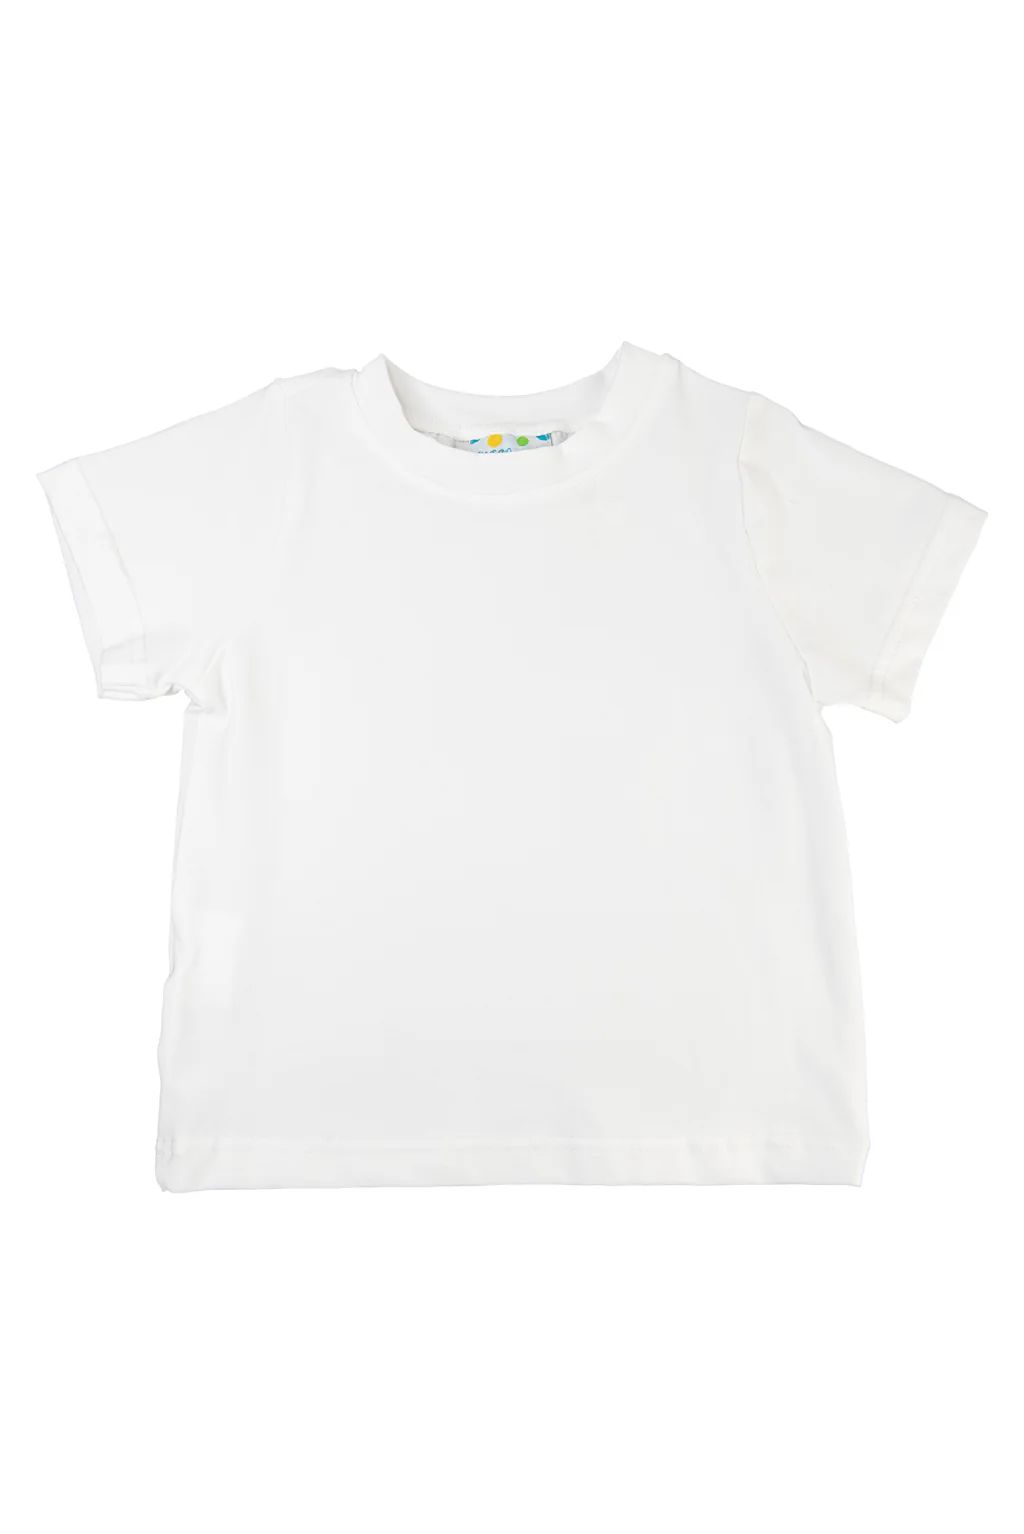 Boys White Pima Shirt Only | Sugar Dumplin' Kids